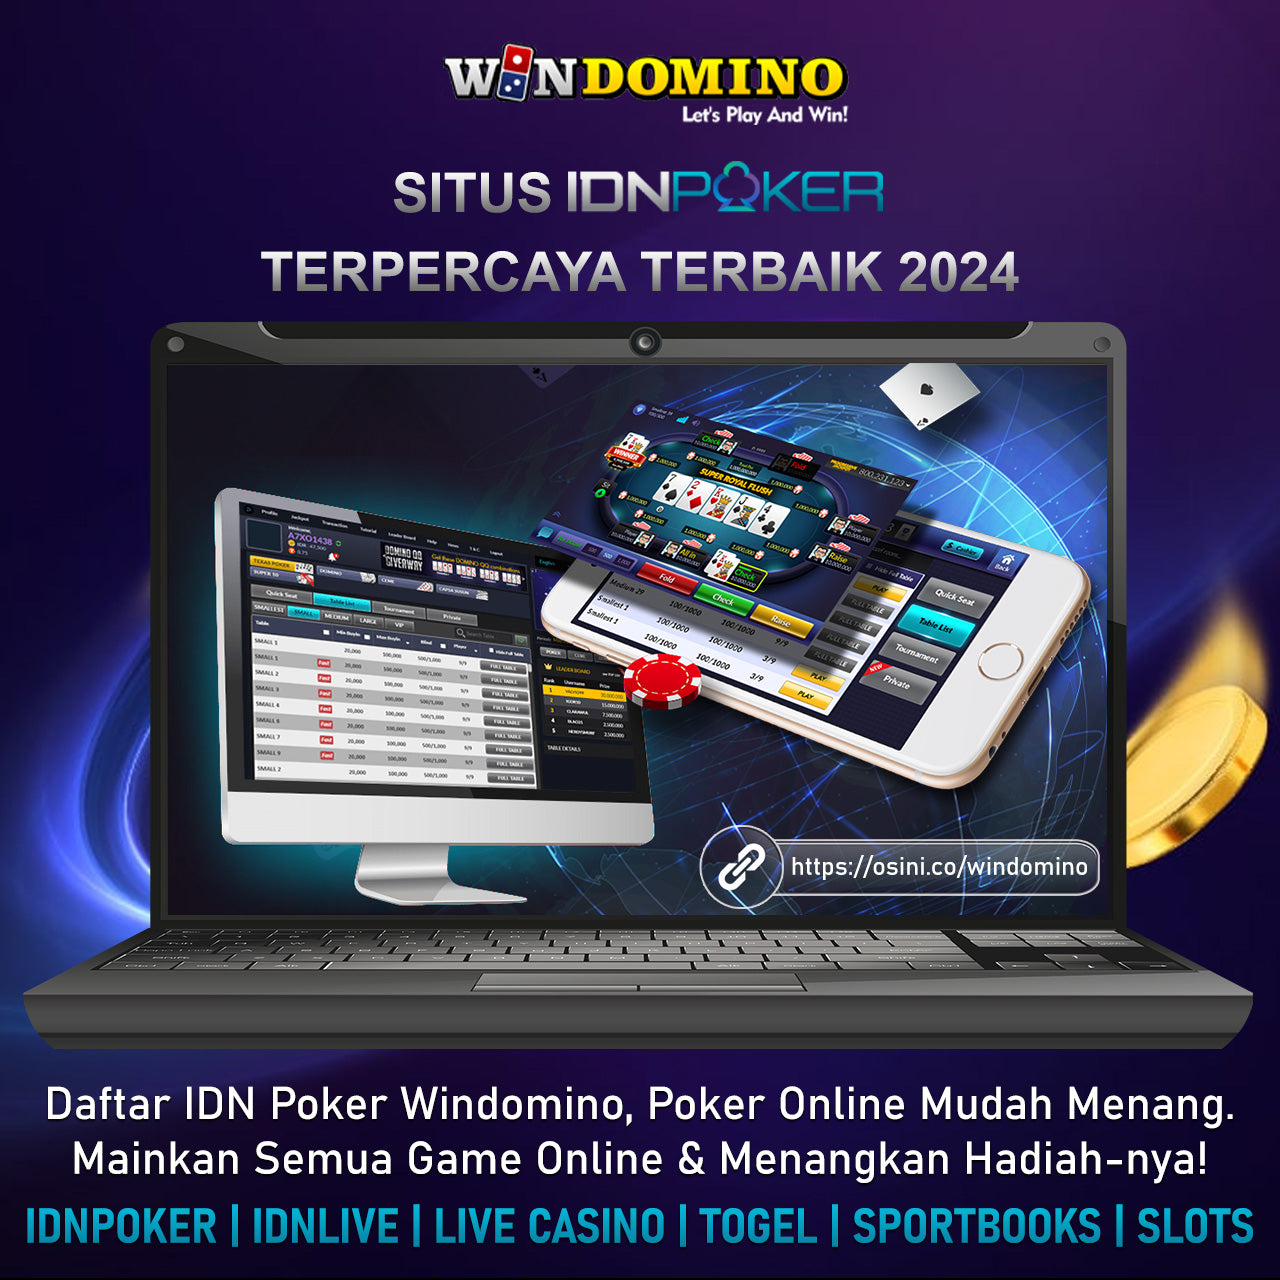 WinDomino Situs IDN Poker Online IDNPlay Terbaik Terpercaya